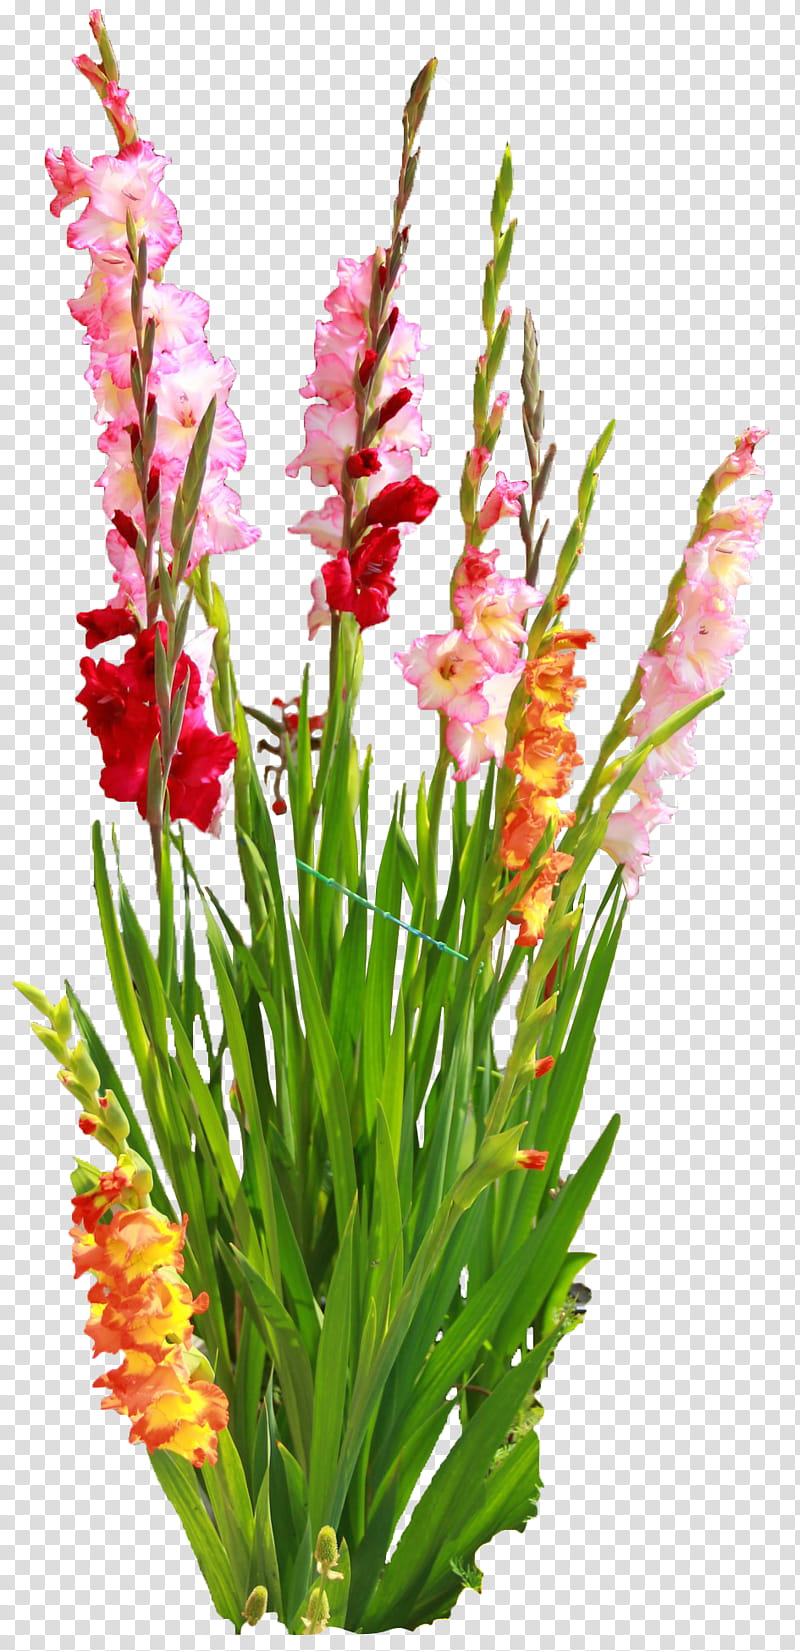 Light Bulb, Gladiolus, Flower, Cut Flowers, Floral Design, Freesia, Incandescent Light Bulb, Plant Stem transparent background PNG clipart